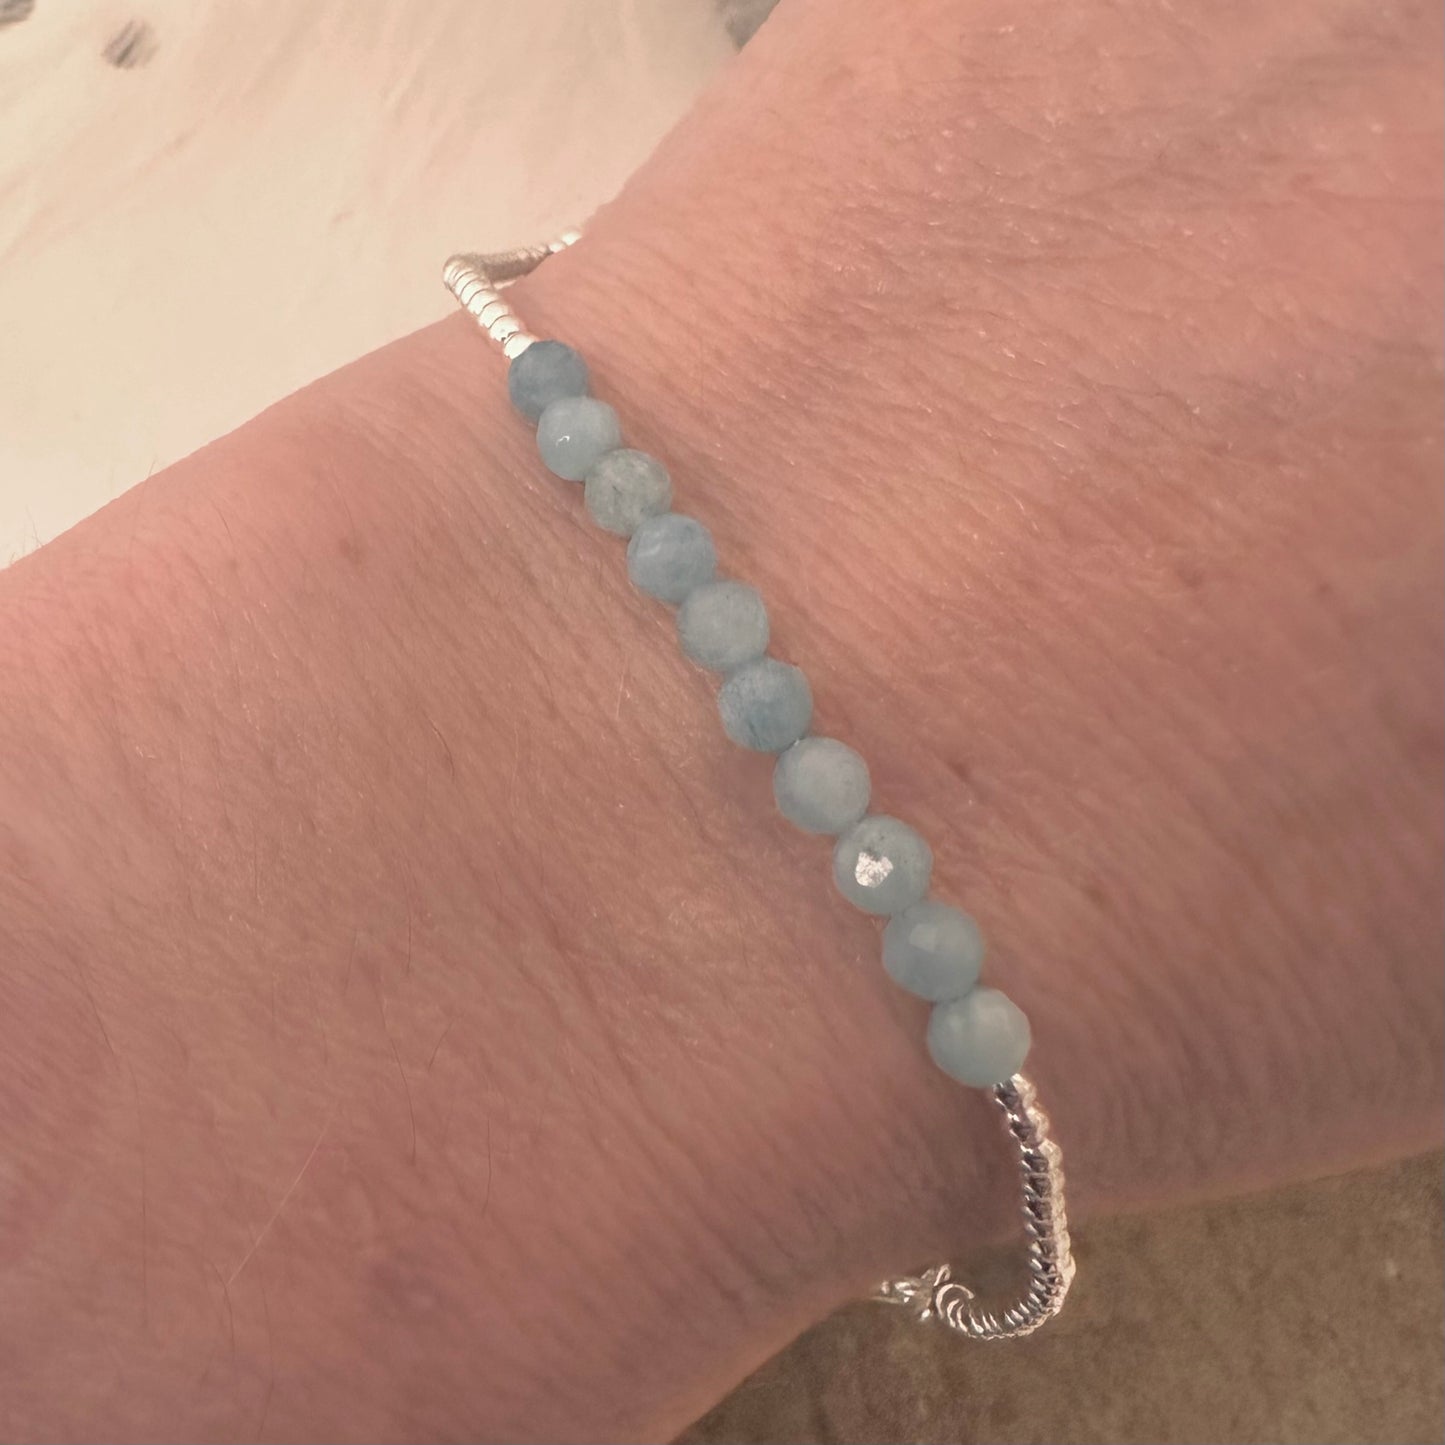 Aquamarine March Birthstone Bracelet, dainty stacking bracelet in sterling silver nft